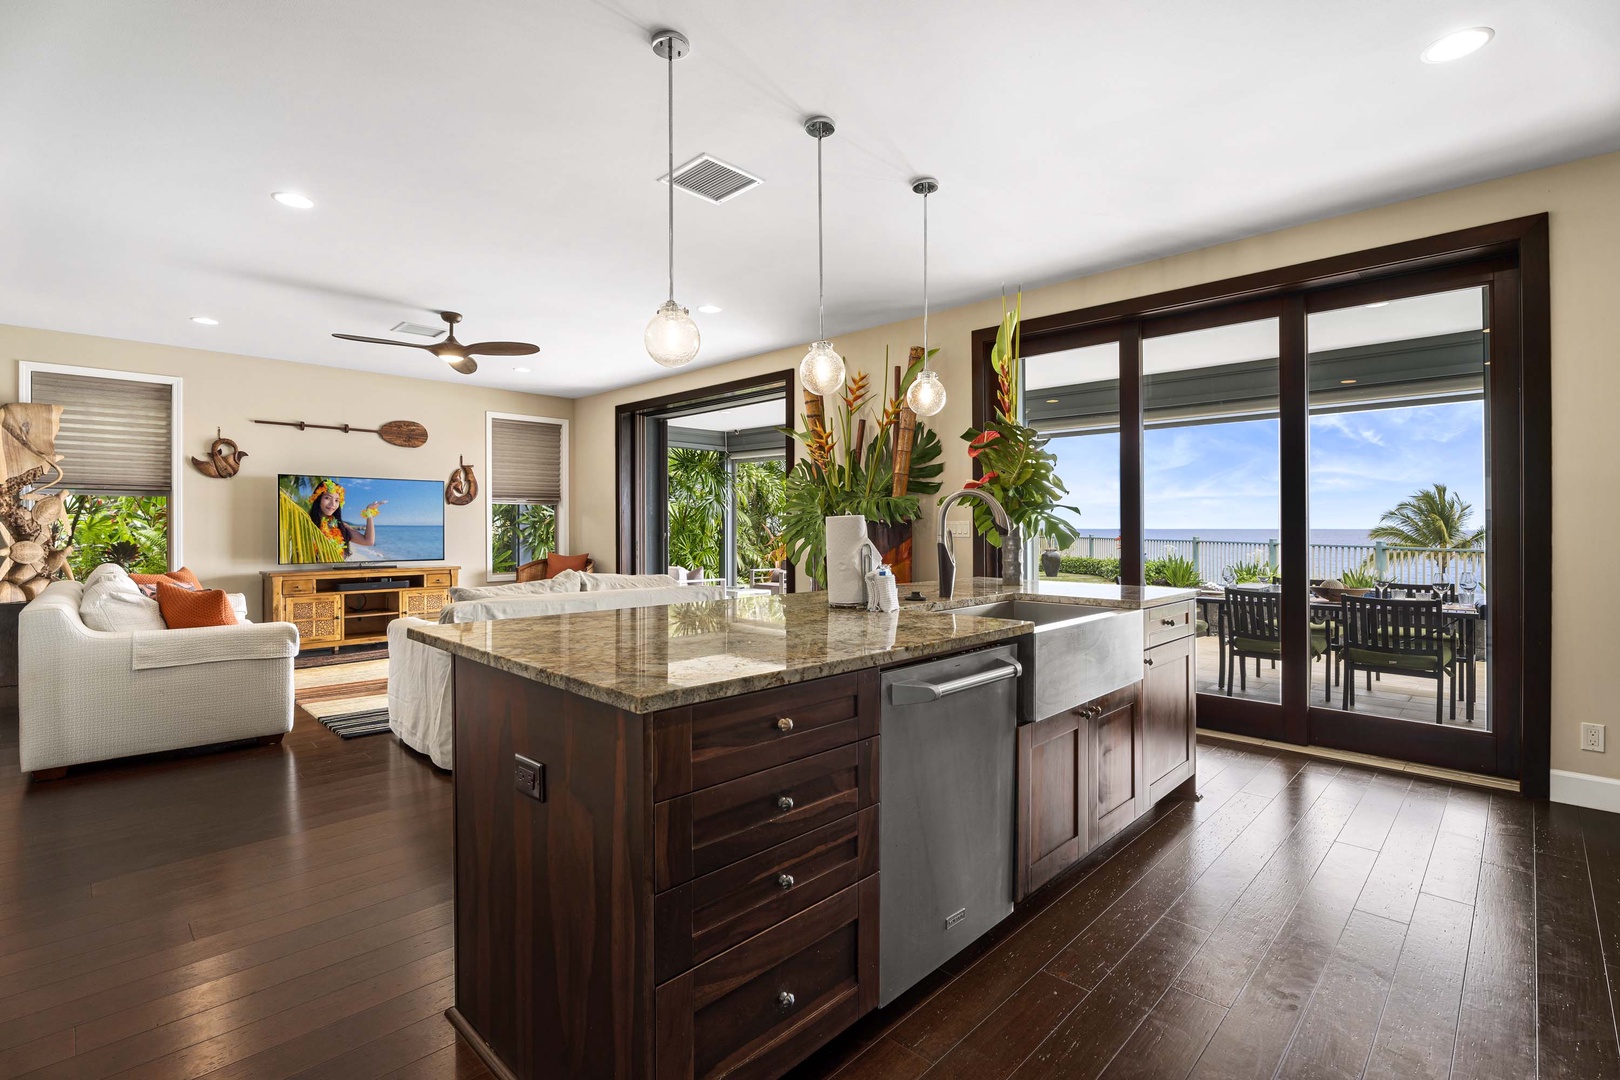 Kailua Kona Vacation Rentals, Holua Kai #20 - Granite counters and stainless appliances throughout!